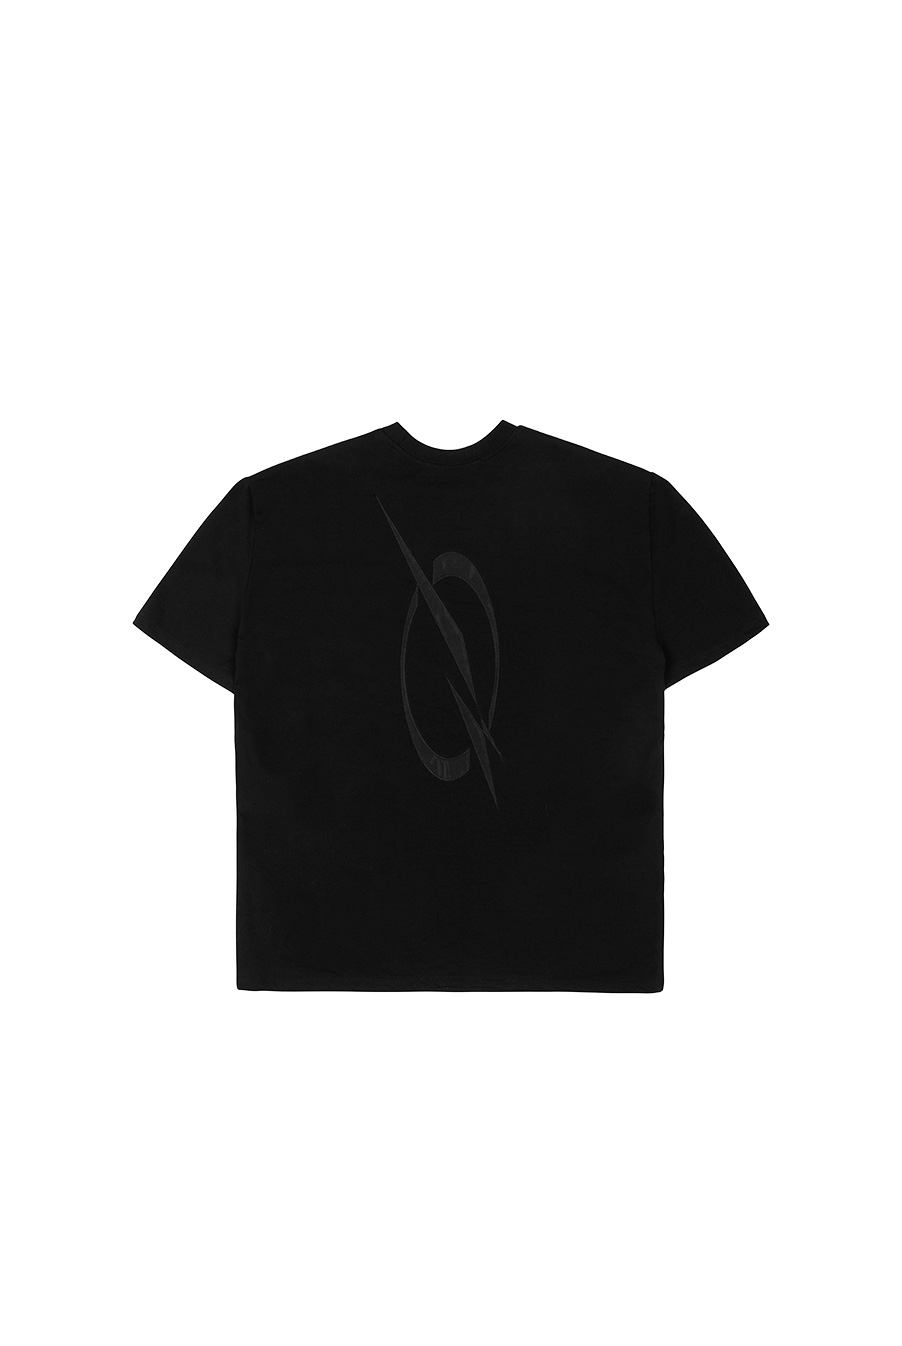 Logo Applique T-shirt (Black)